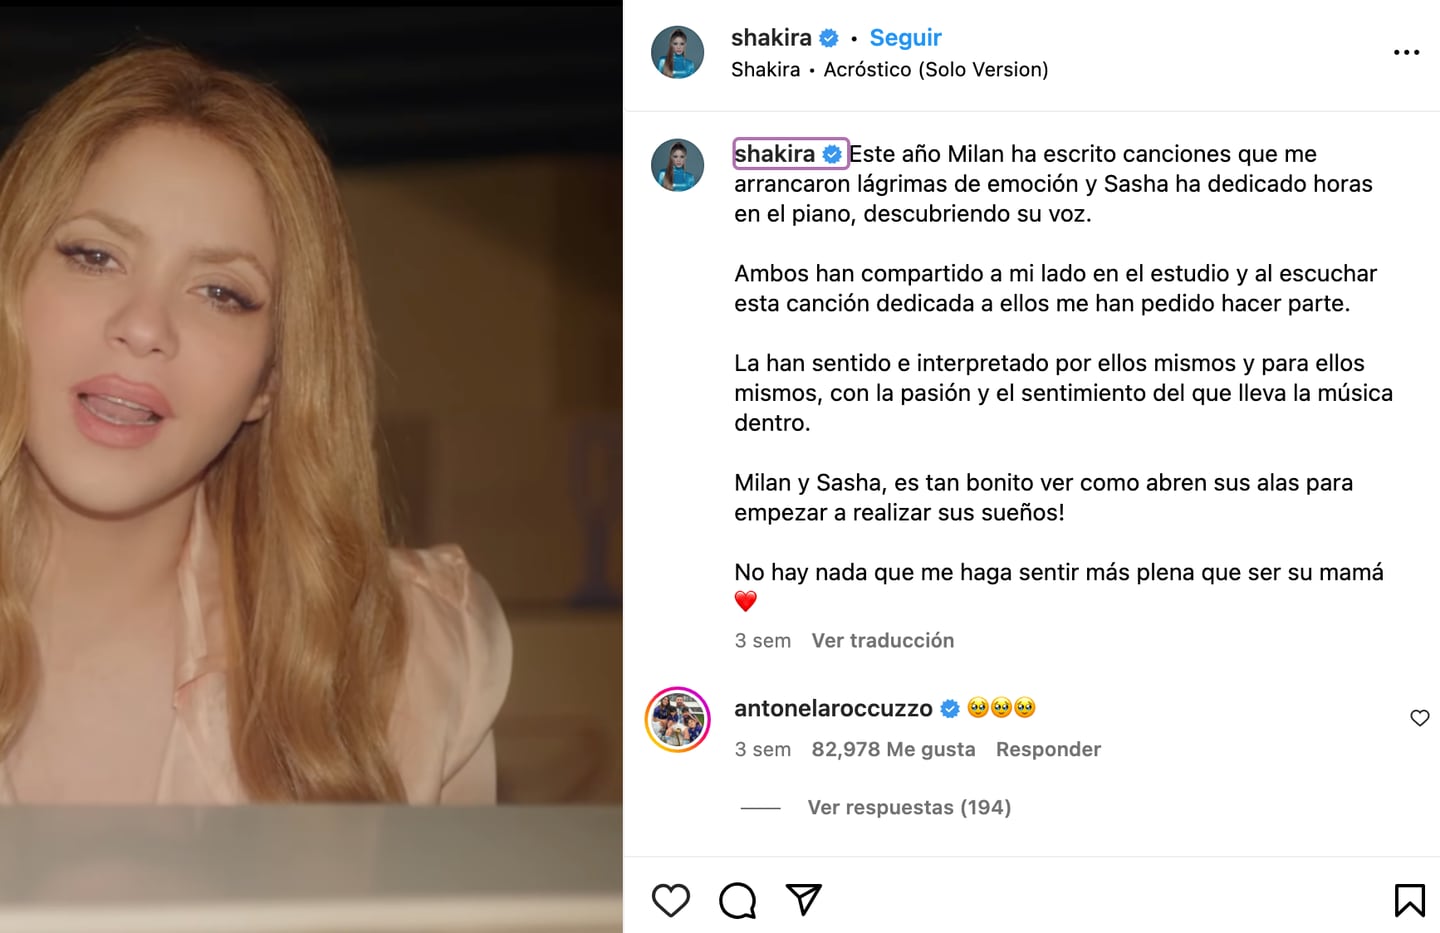 Shakira "Acróstico"